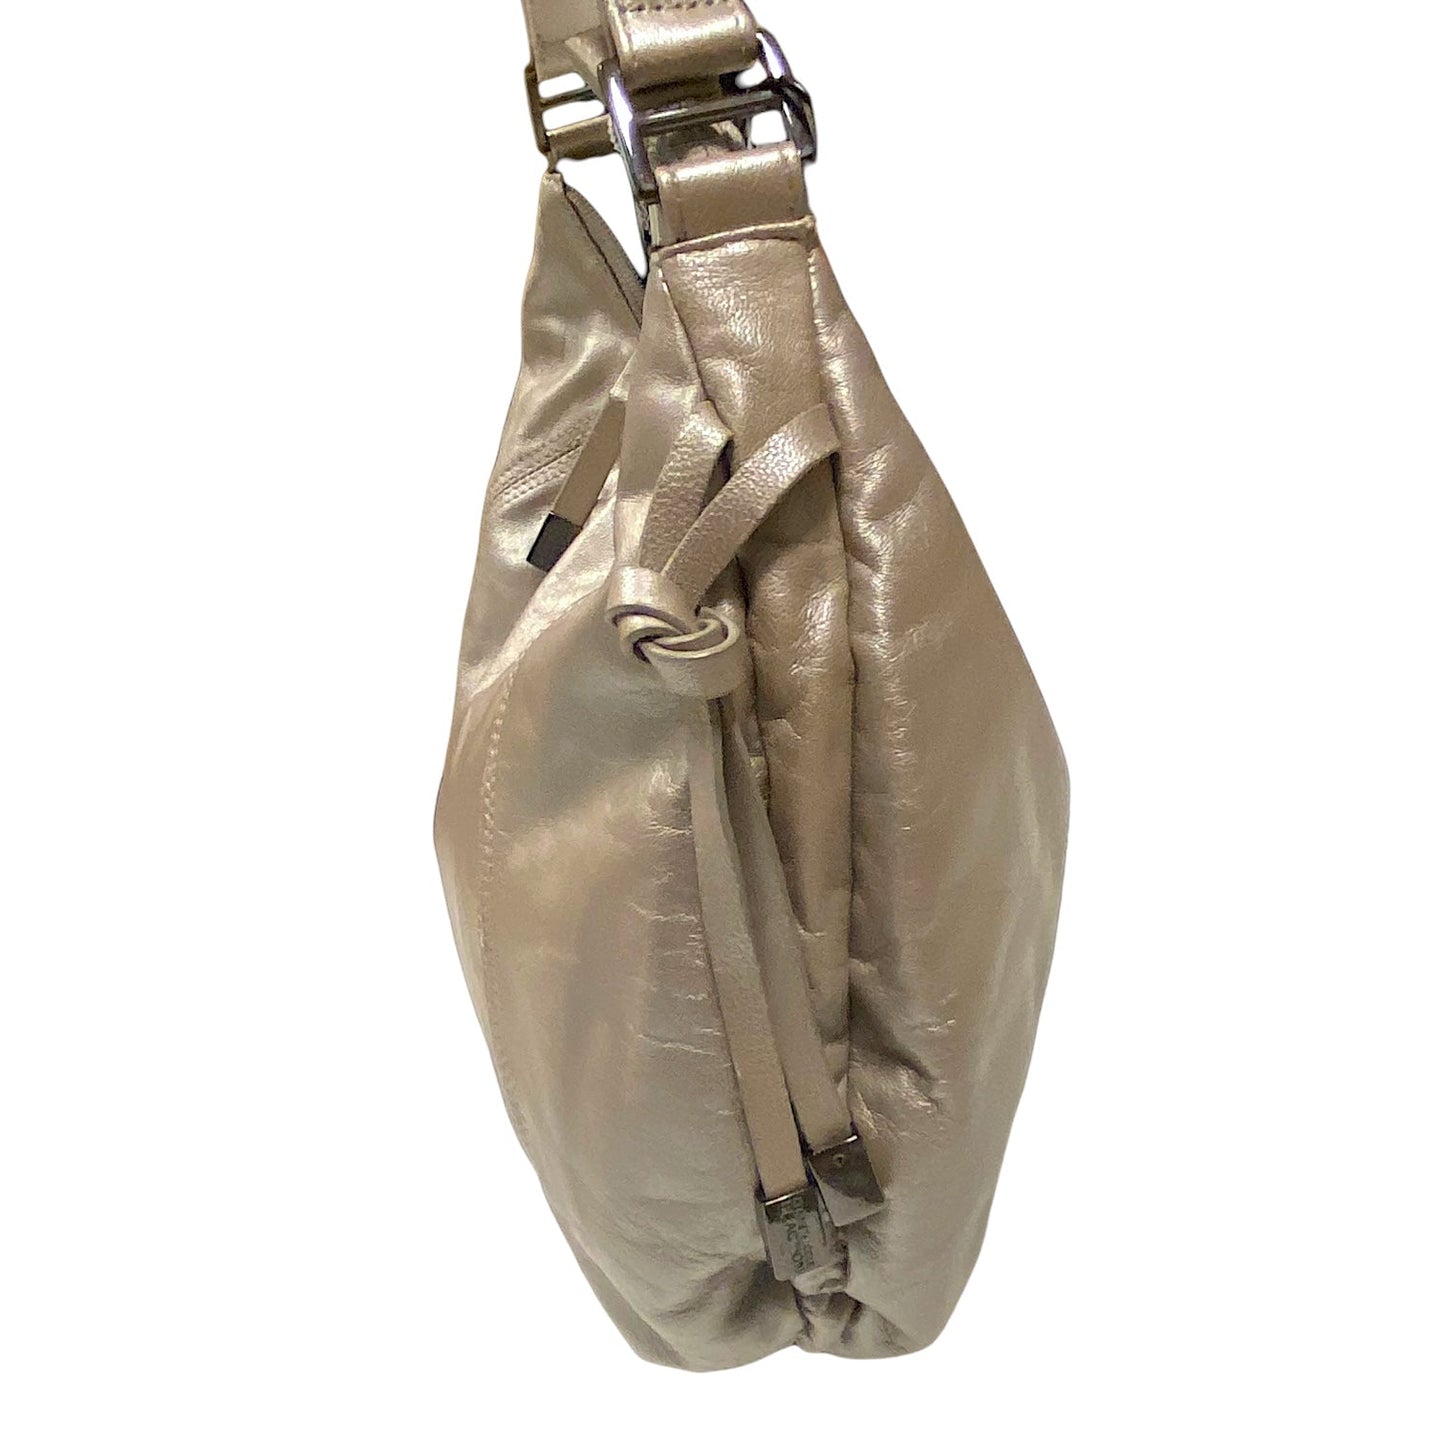 Handbag Leather By Kenneth Cole Reaction  Size: Medium